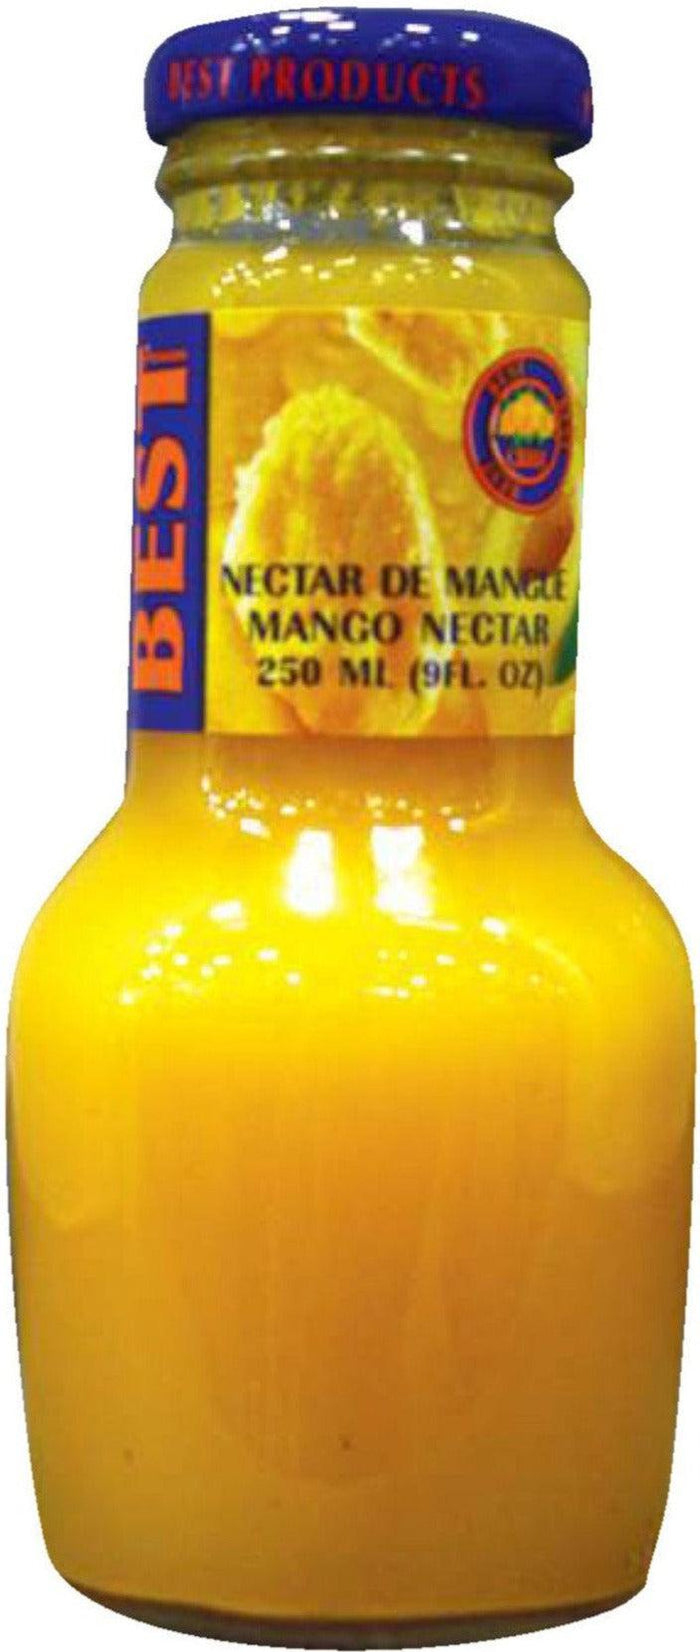 VSO - Best - Fruit Juice - Mango Juice - Bottles